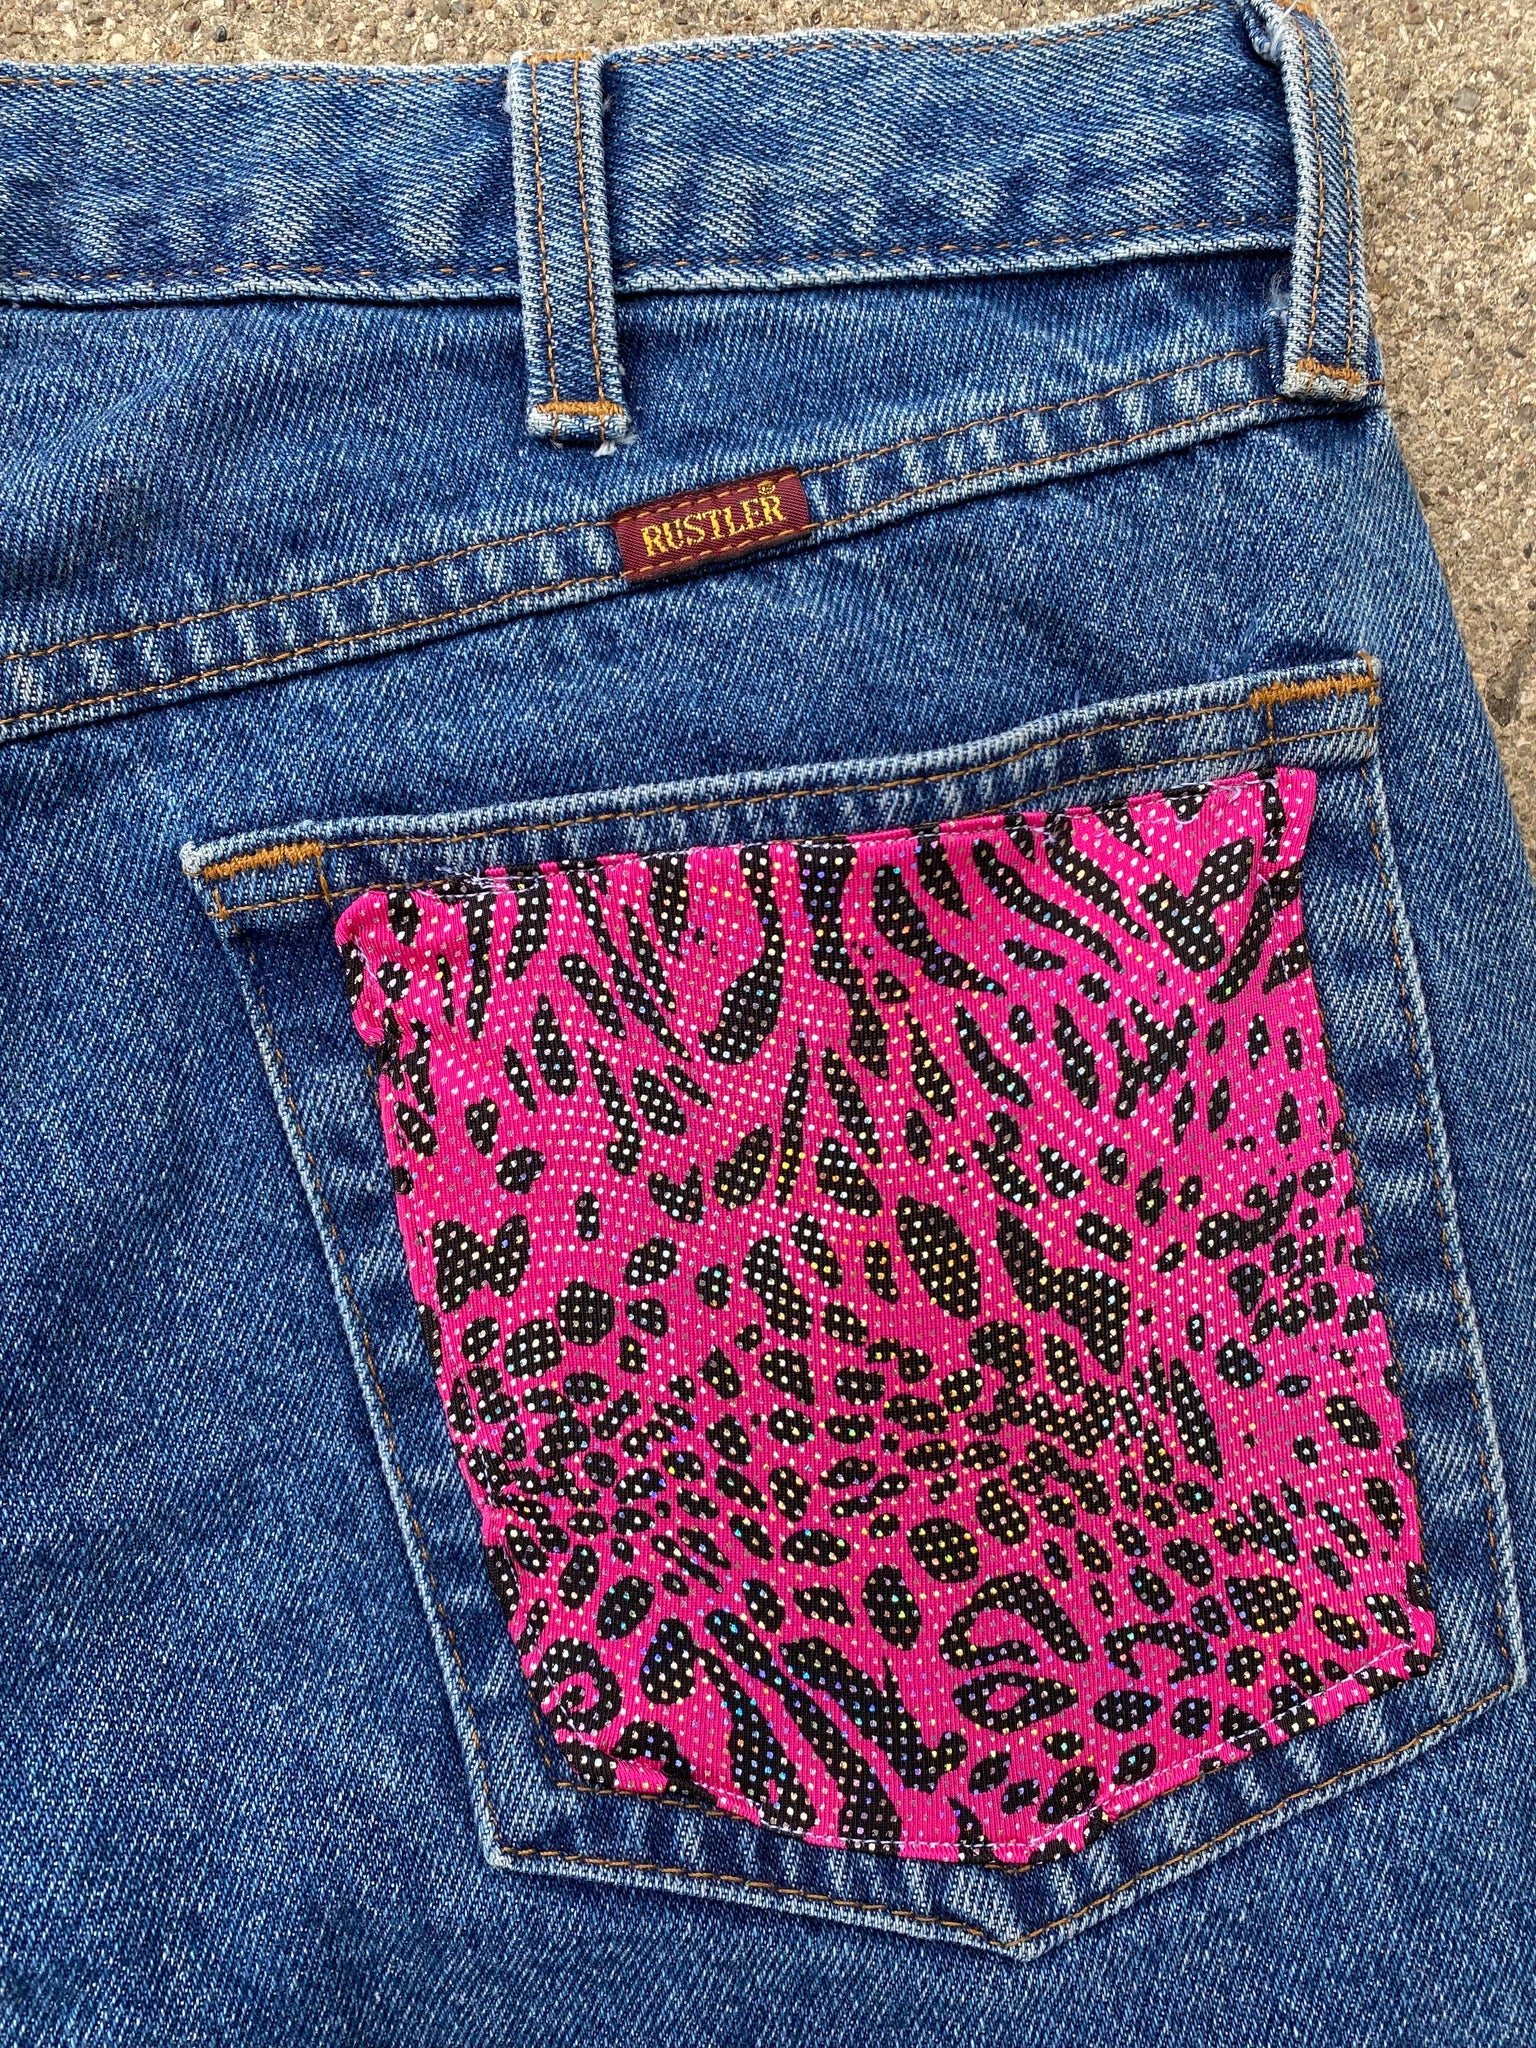 Rustler Jeans Pockets – Daydream Junk